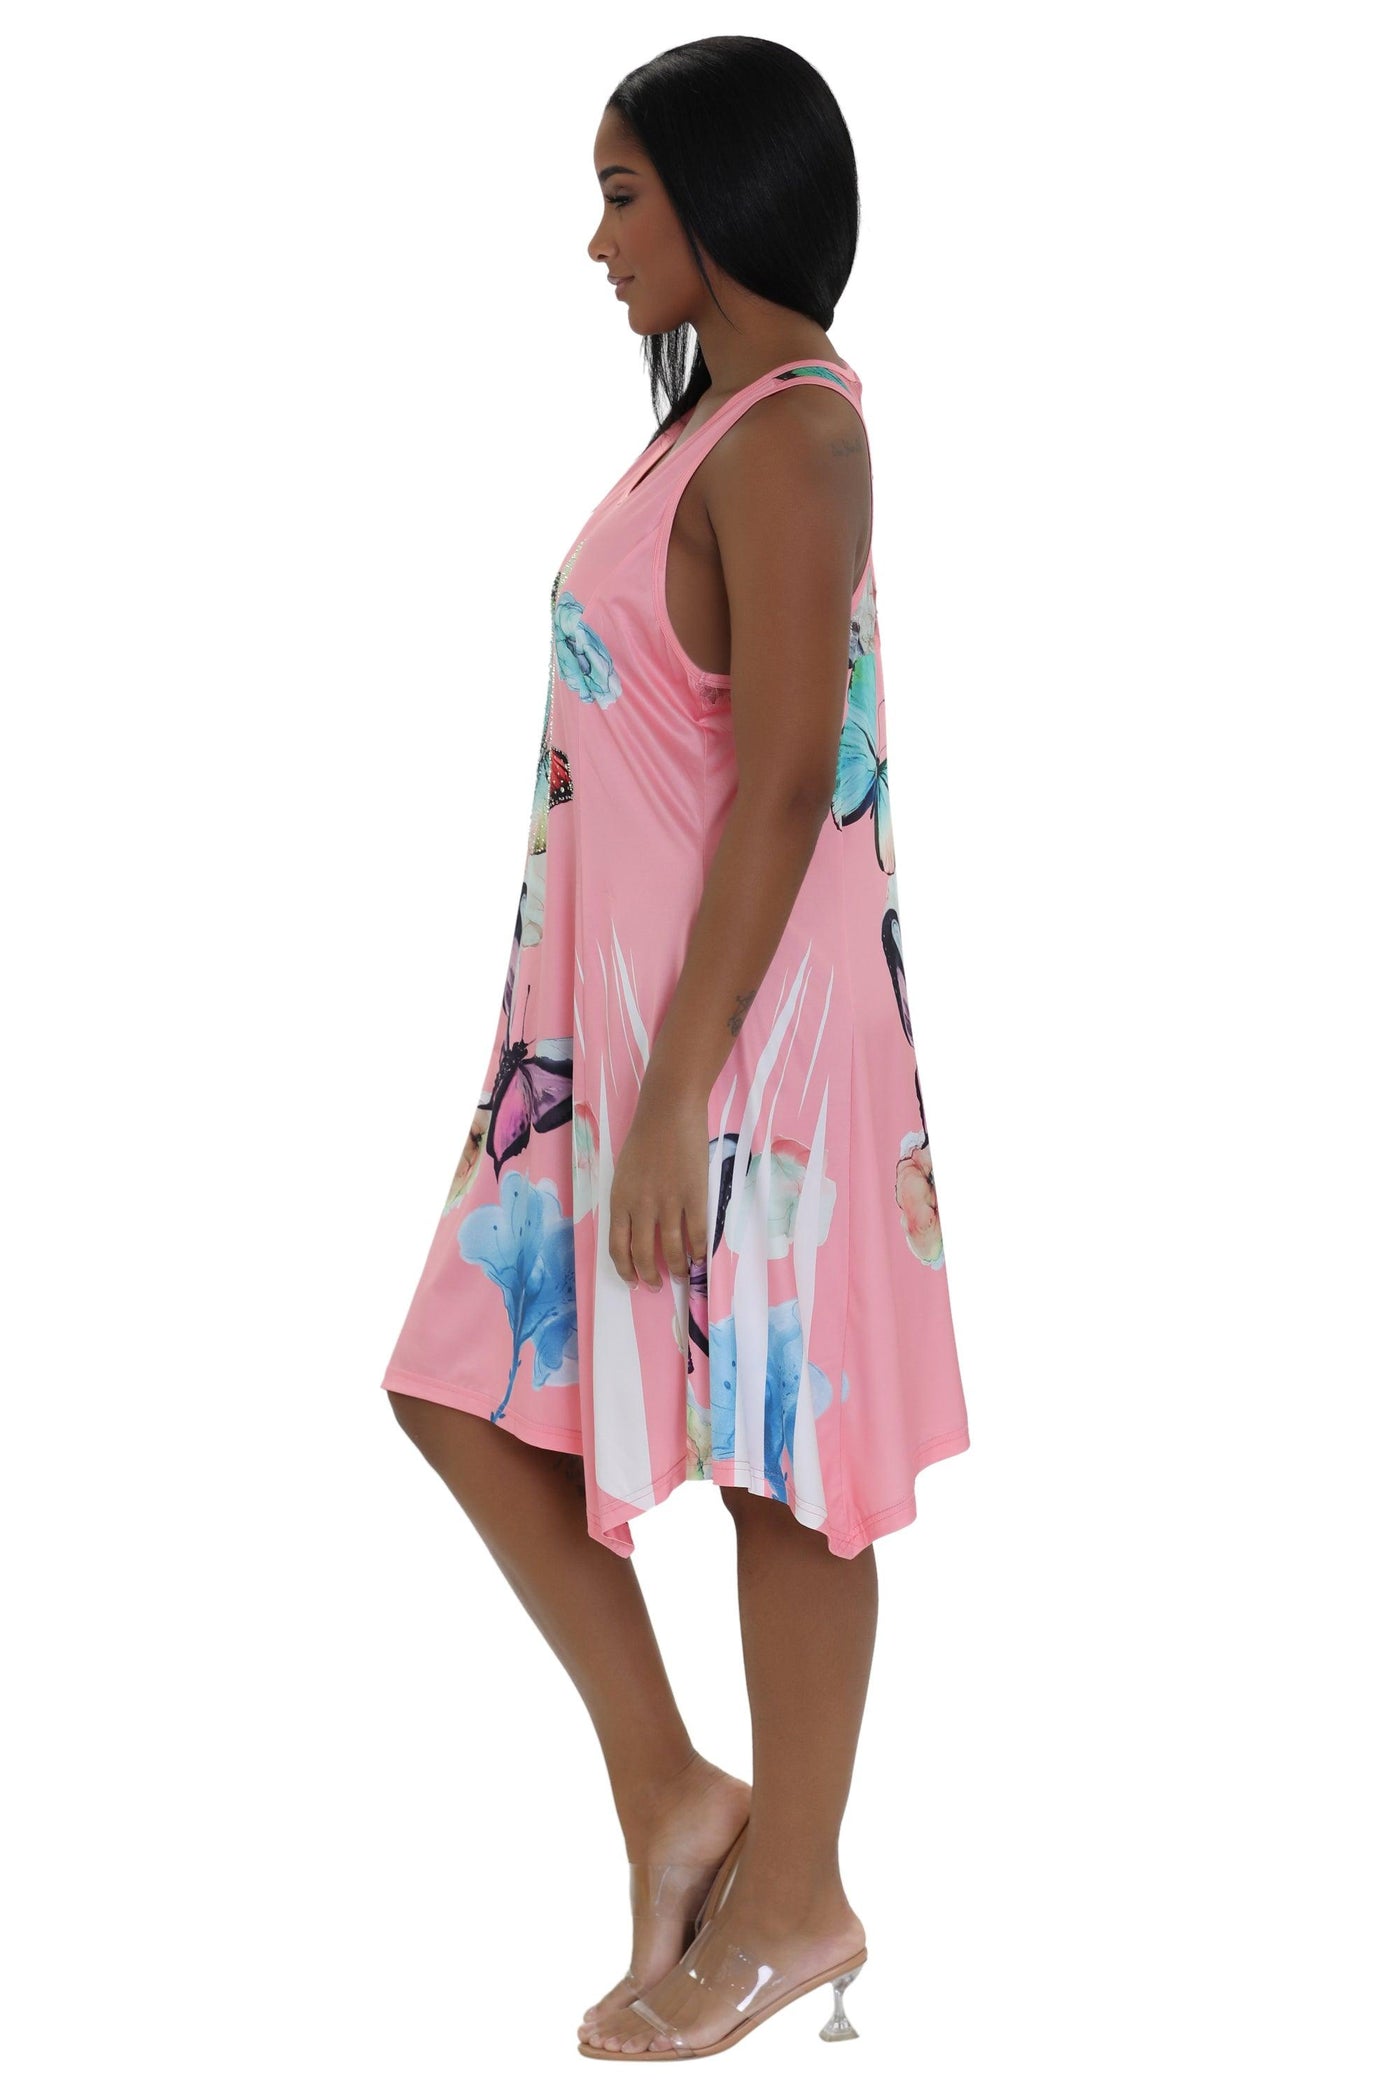 Butterfly Print Dress 21237  - Advance Apparels Inc